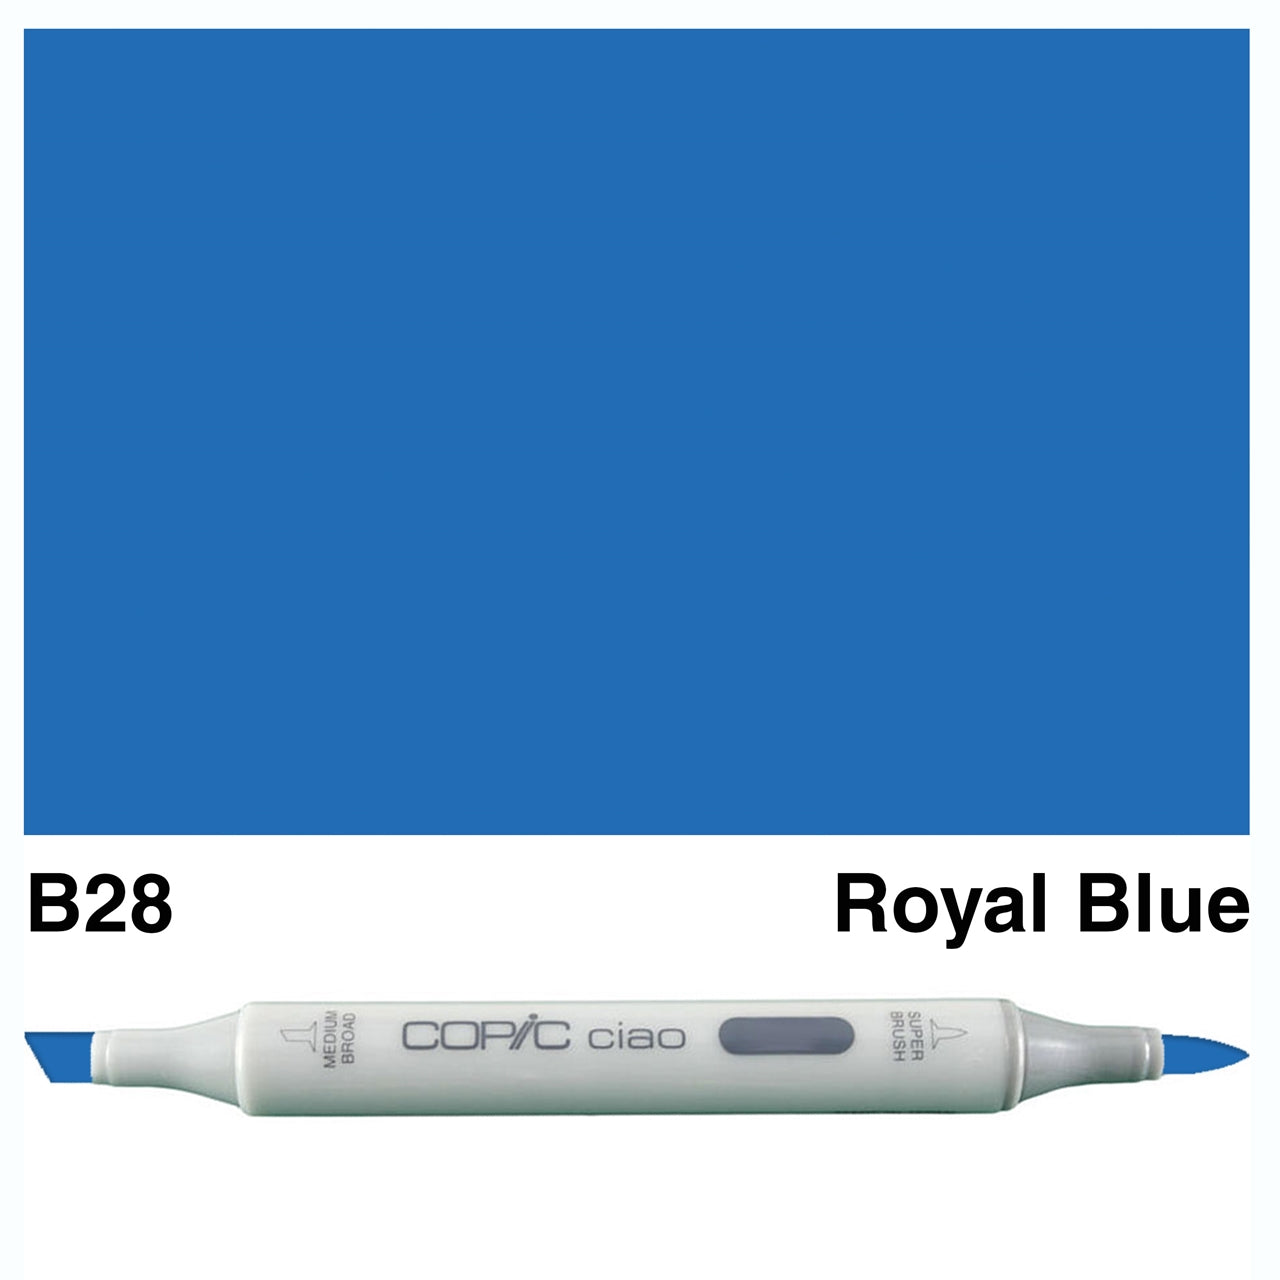 Rotulador Copic Ciao de doble punta, color azul pálido